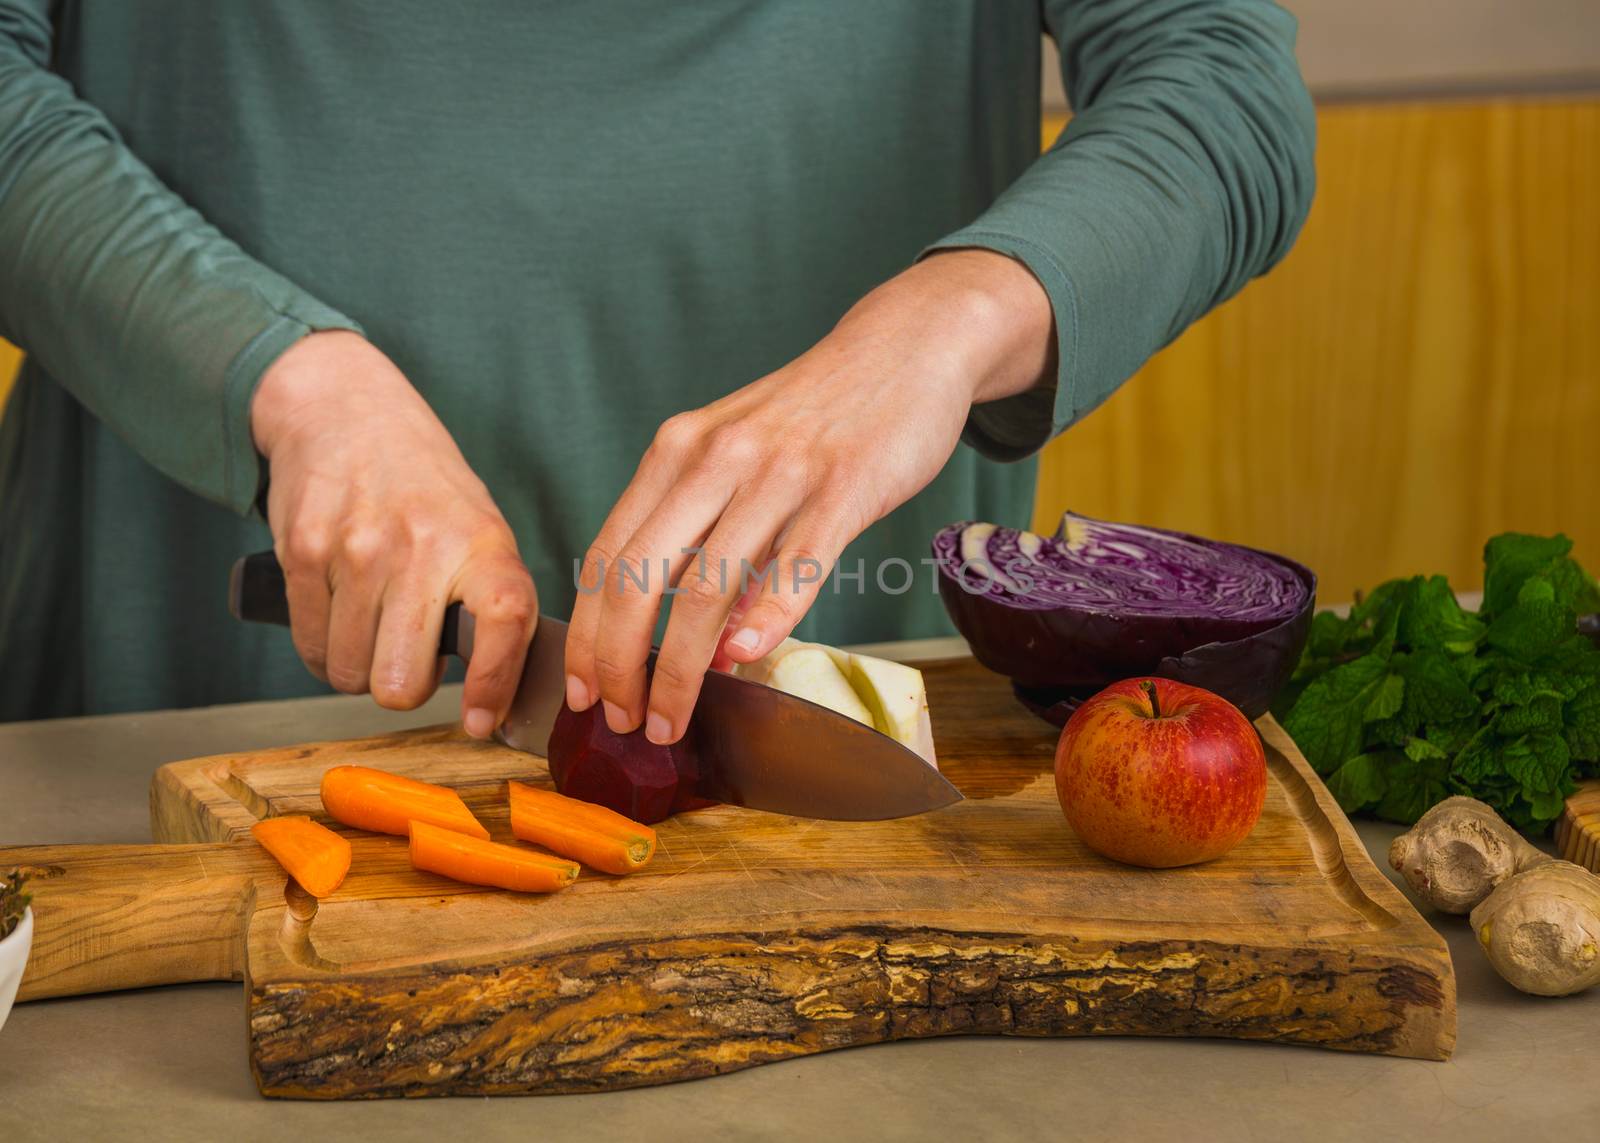 Several vegetables on top of a wooden board. Ingredients for detox juice.
